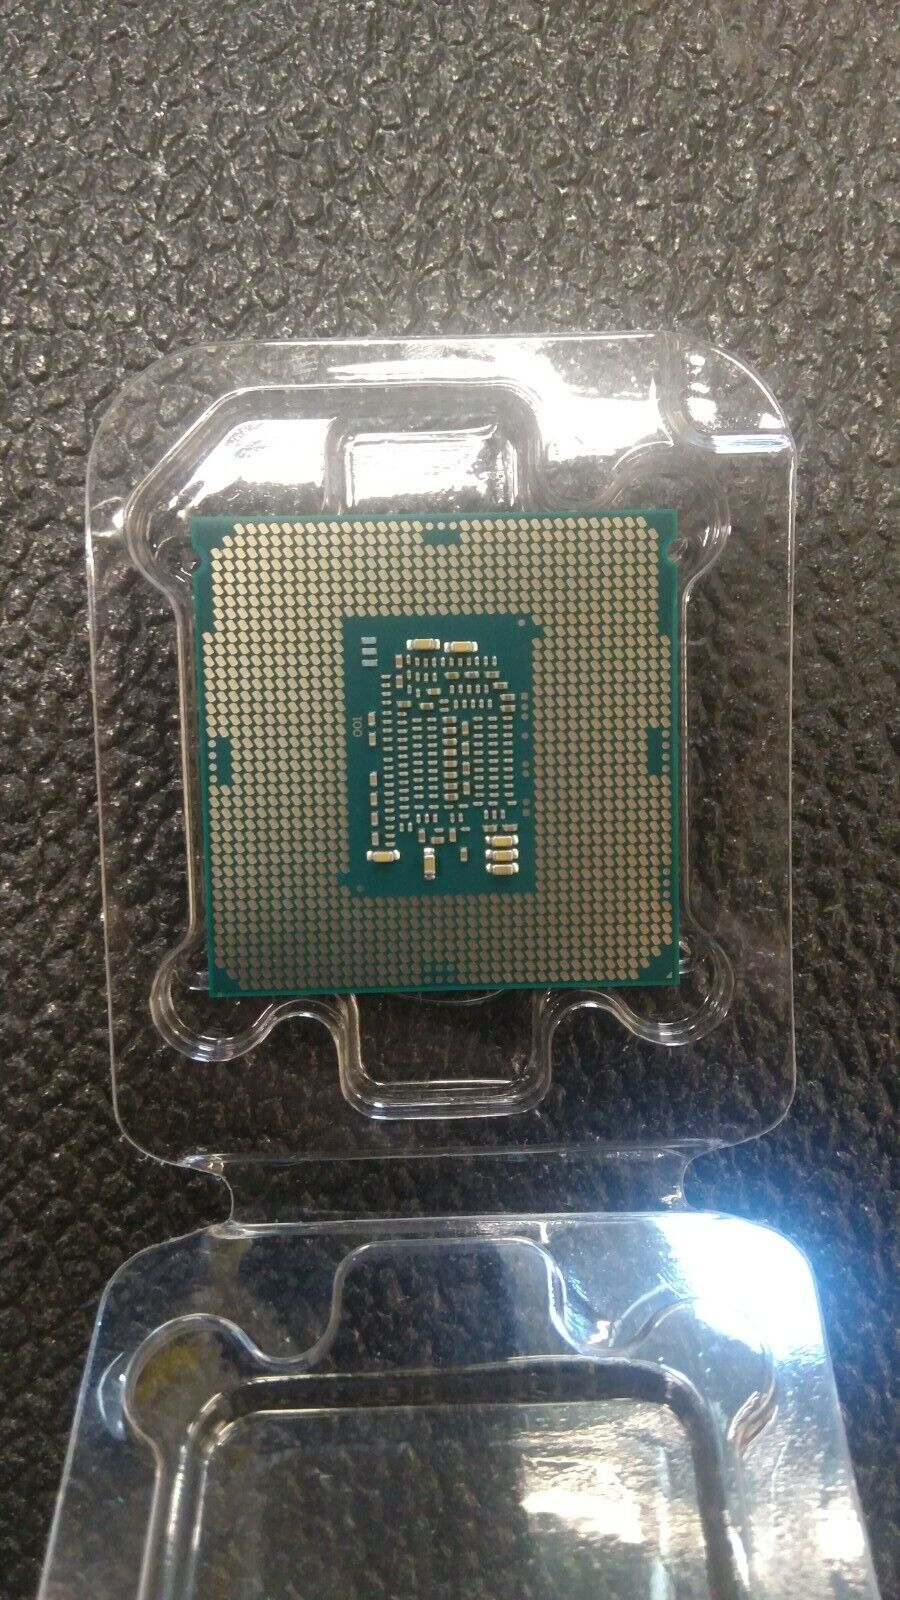 OEM Intel Core i5-6600K 6MB Cache 3.5Ghz Quad Core Processor 